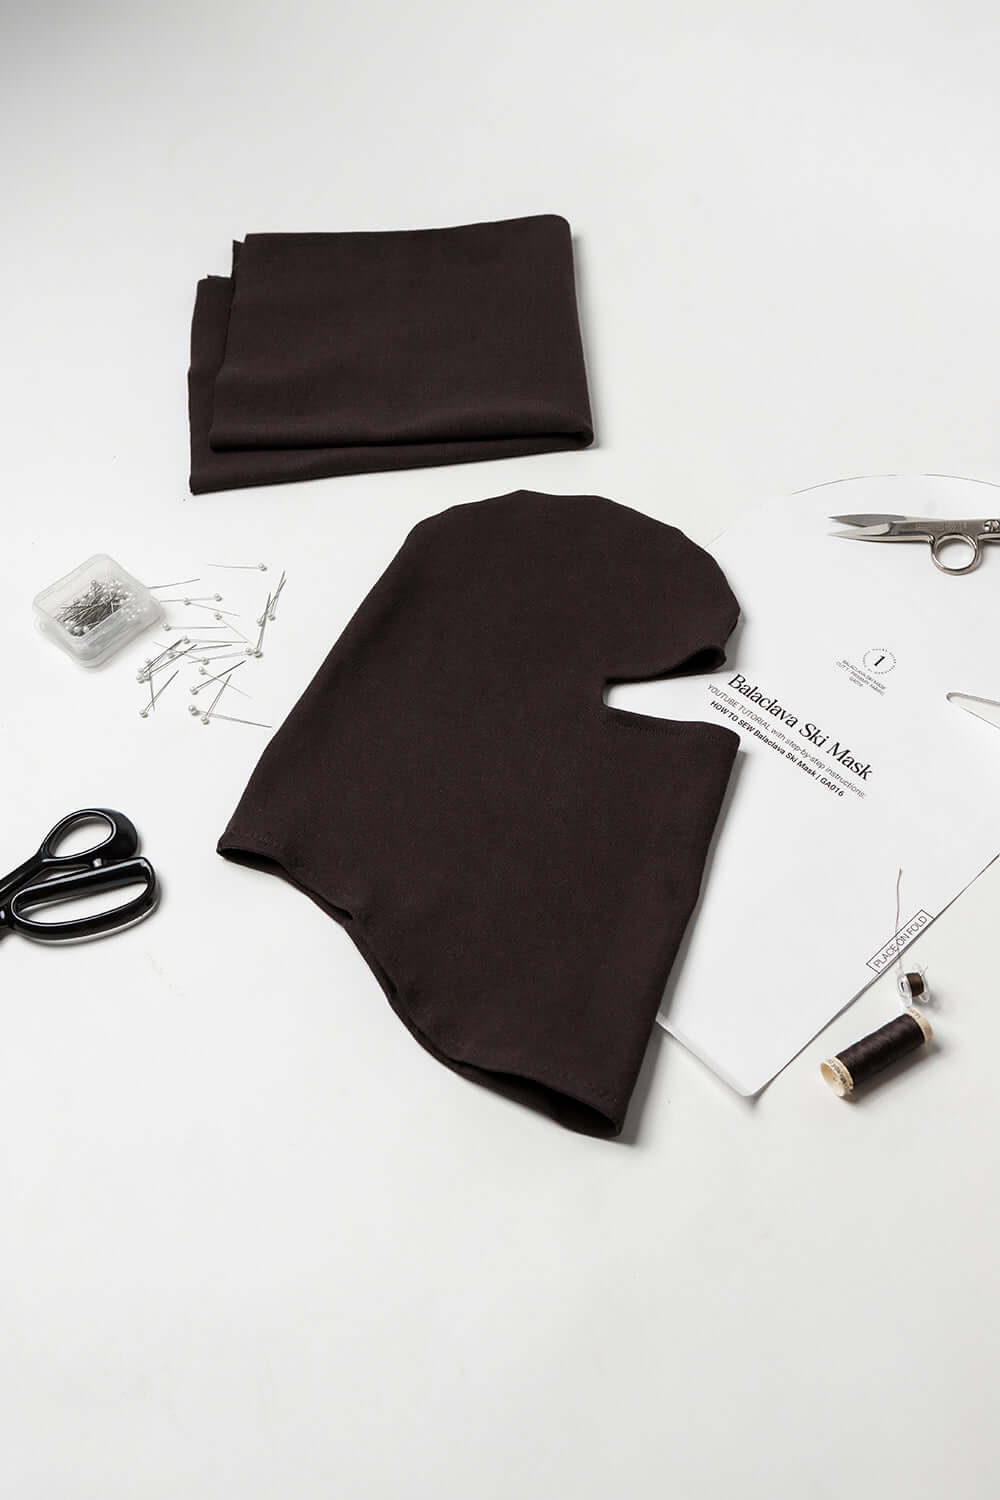 Balaclava Stretch Ski Mask DIY - free digital sewing pattern